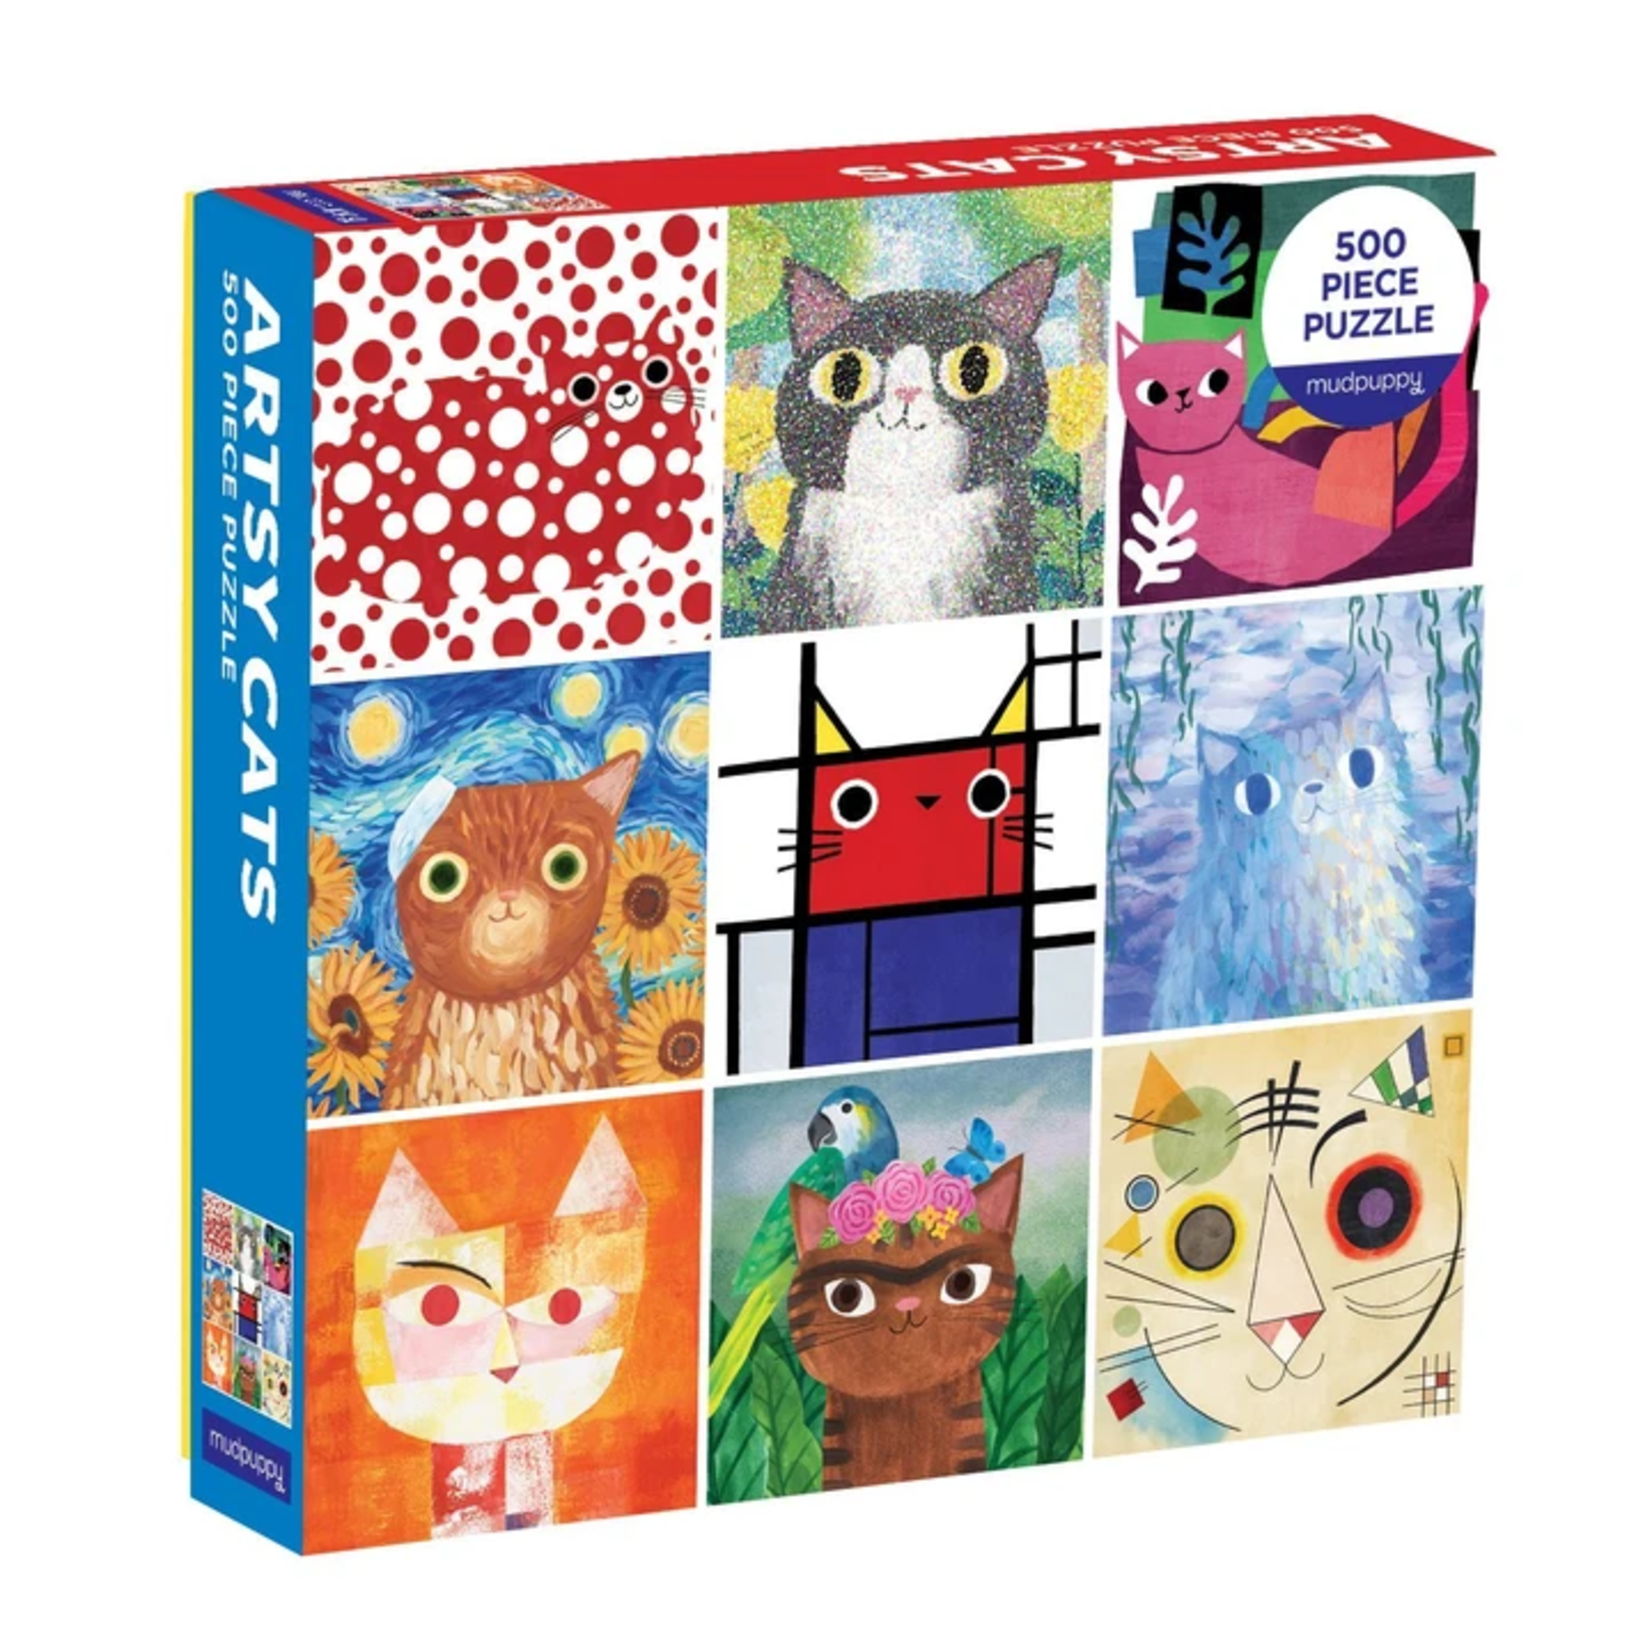 Mudpuppy Artsy Cats puzzle by Angie Rozelaar 500 - Piece Jigsaw Puzzle